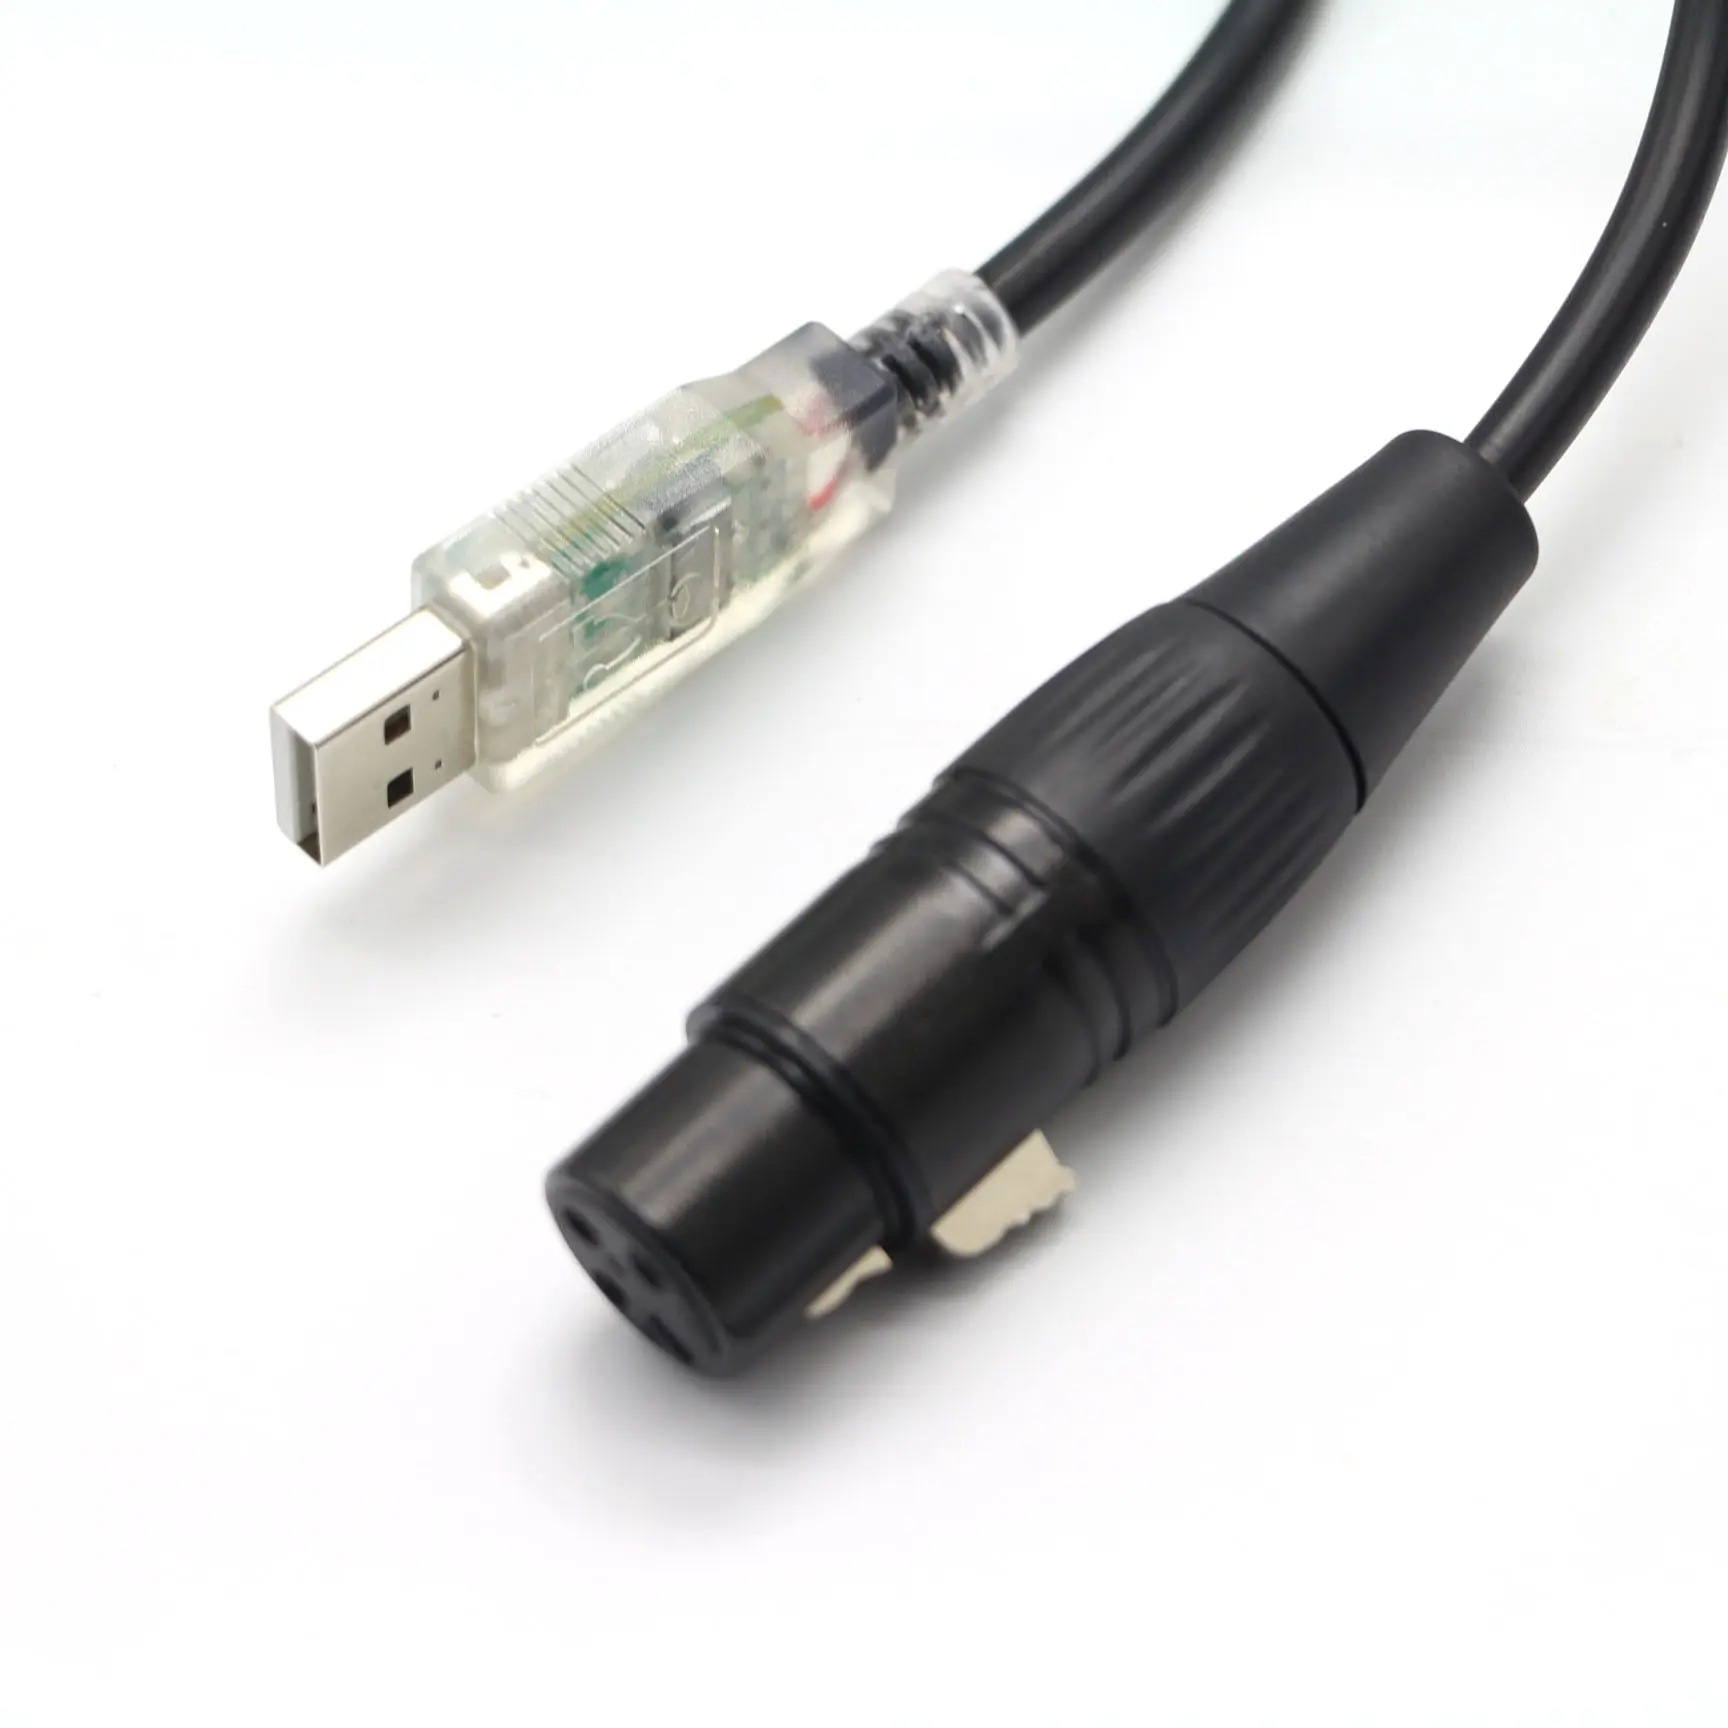 USB-Mikrofon kabel, XLR-Buchse zu USB-Mikrofon verbindungs konverter kabel für Mikrofone oder Aufnahme Karaoke Sing,10 Fuß (USB zu XLR)